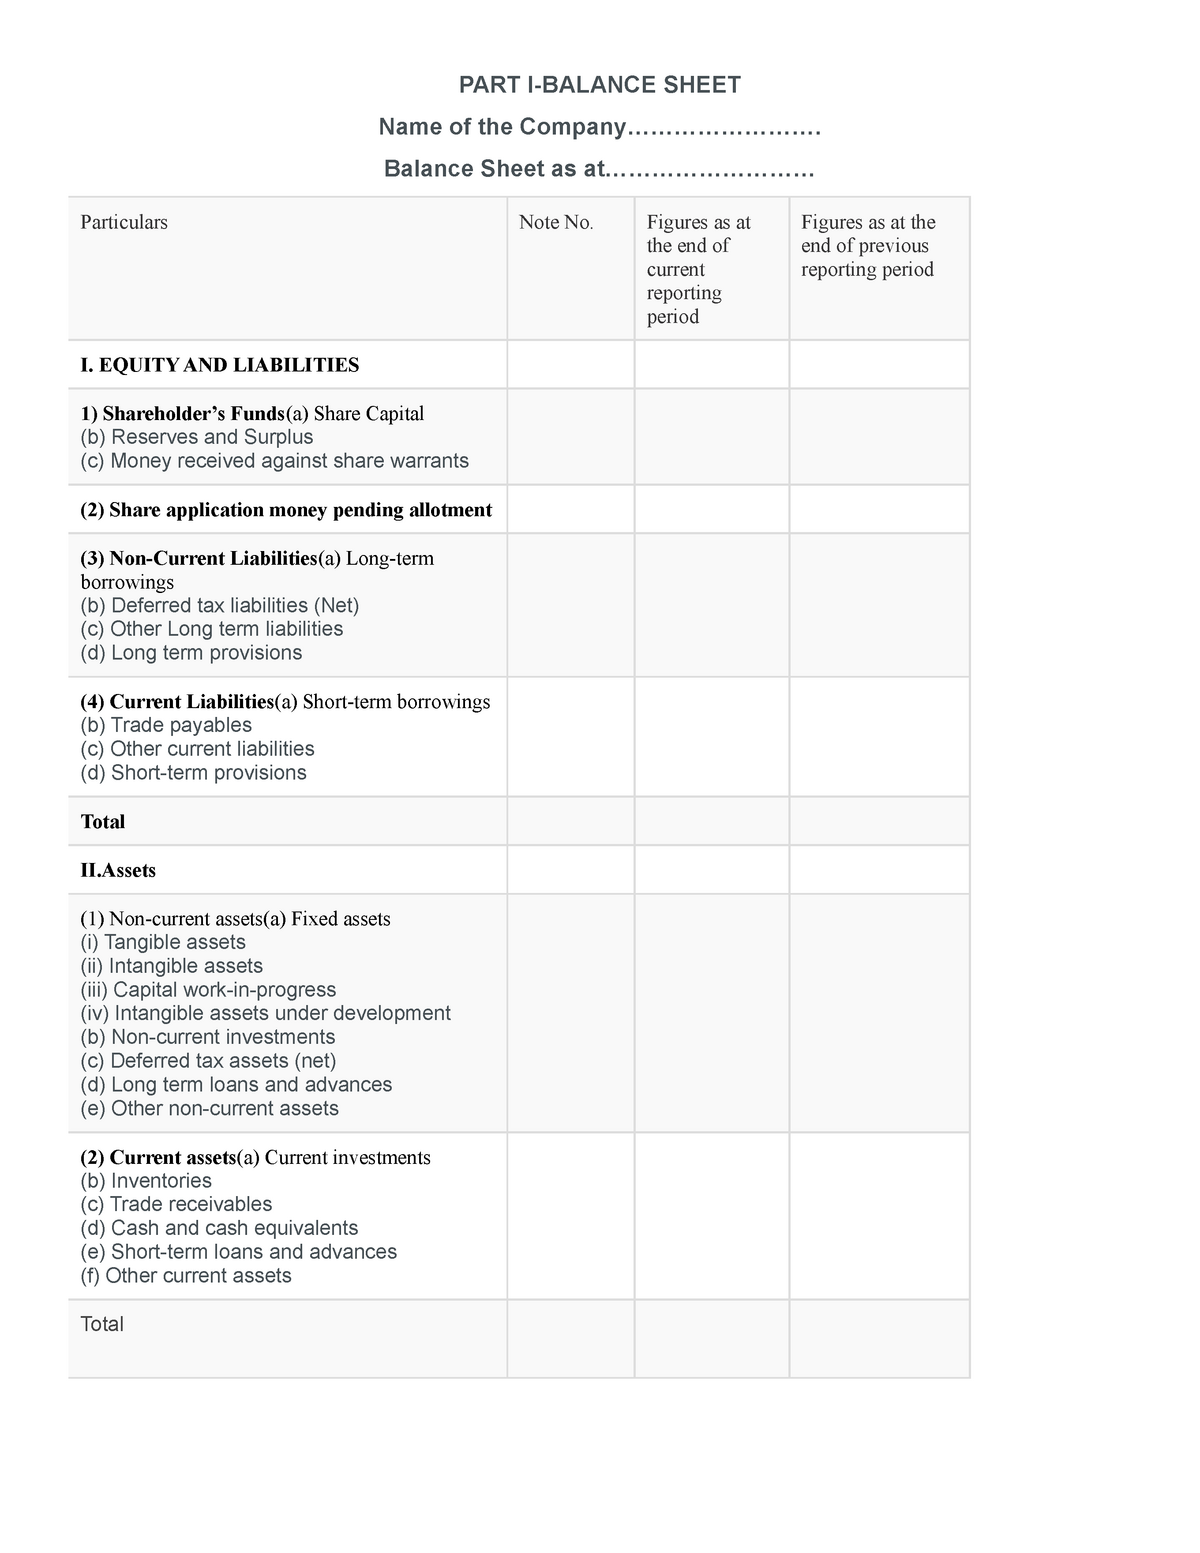 balance-sheet-format-as-per-schedule-iii-of-companies-act-2013-part